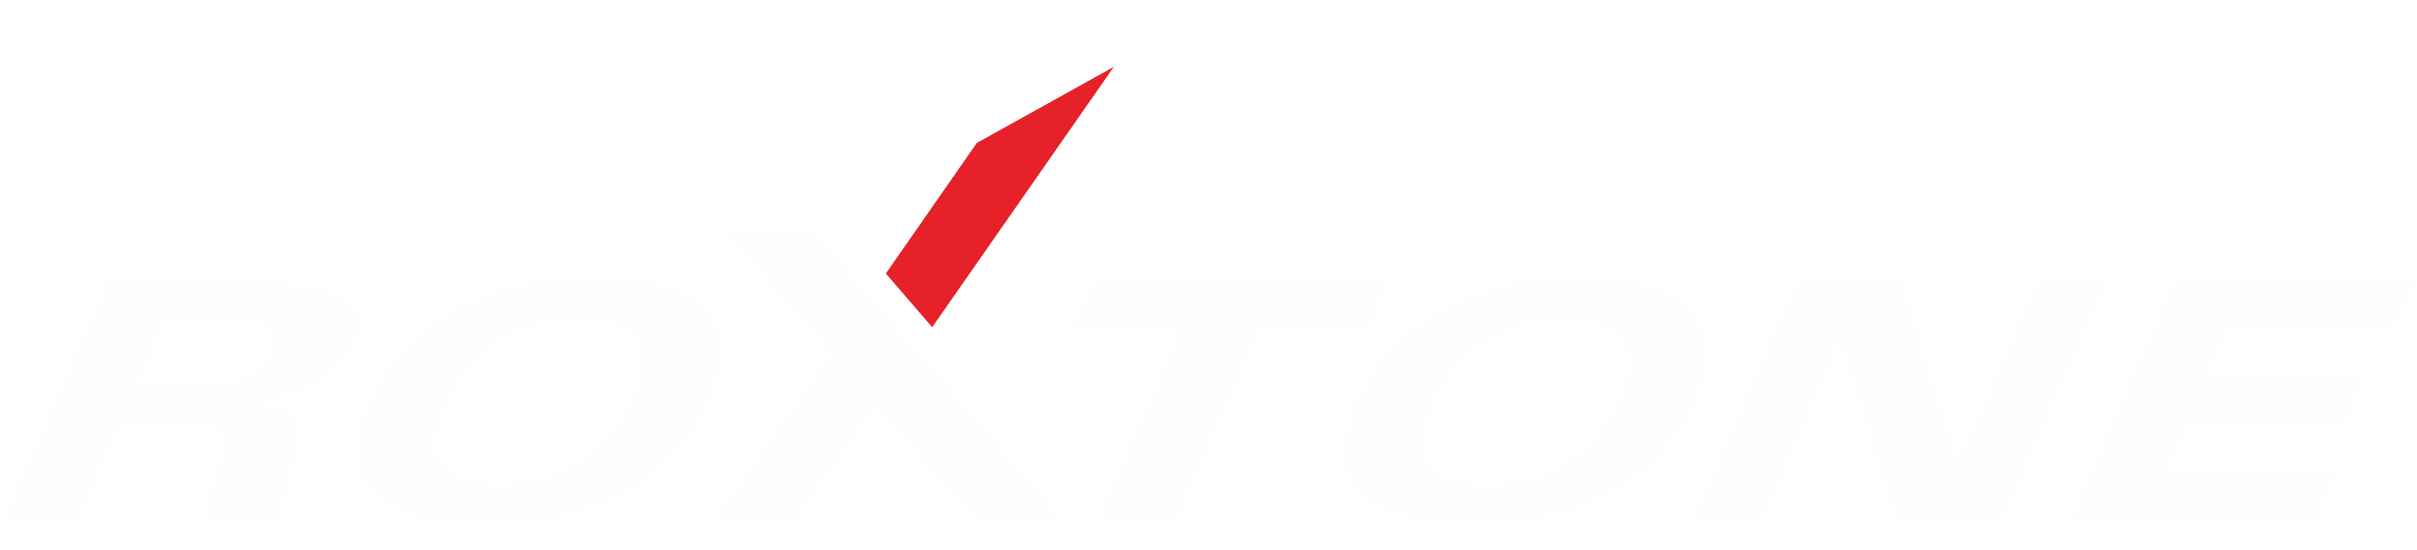 логотип02